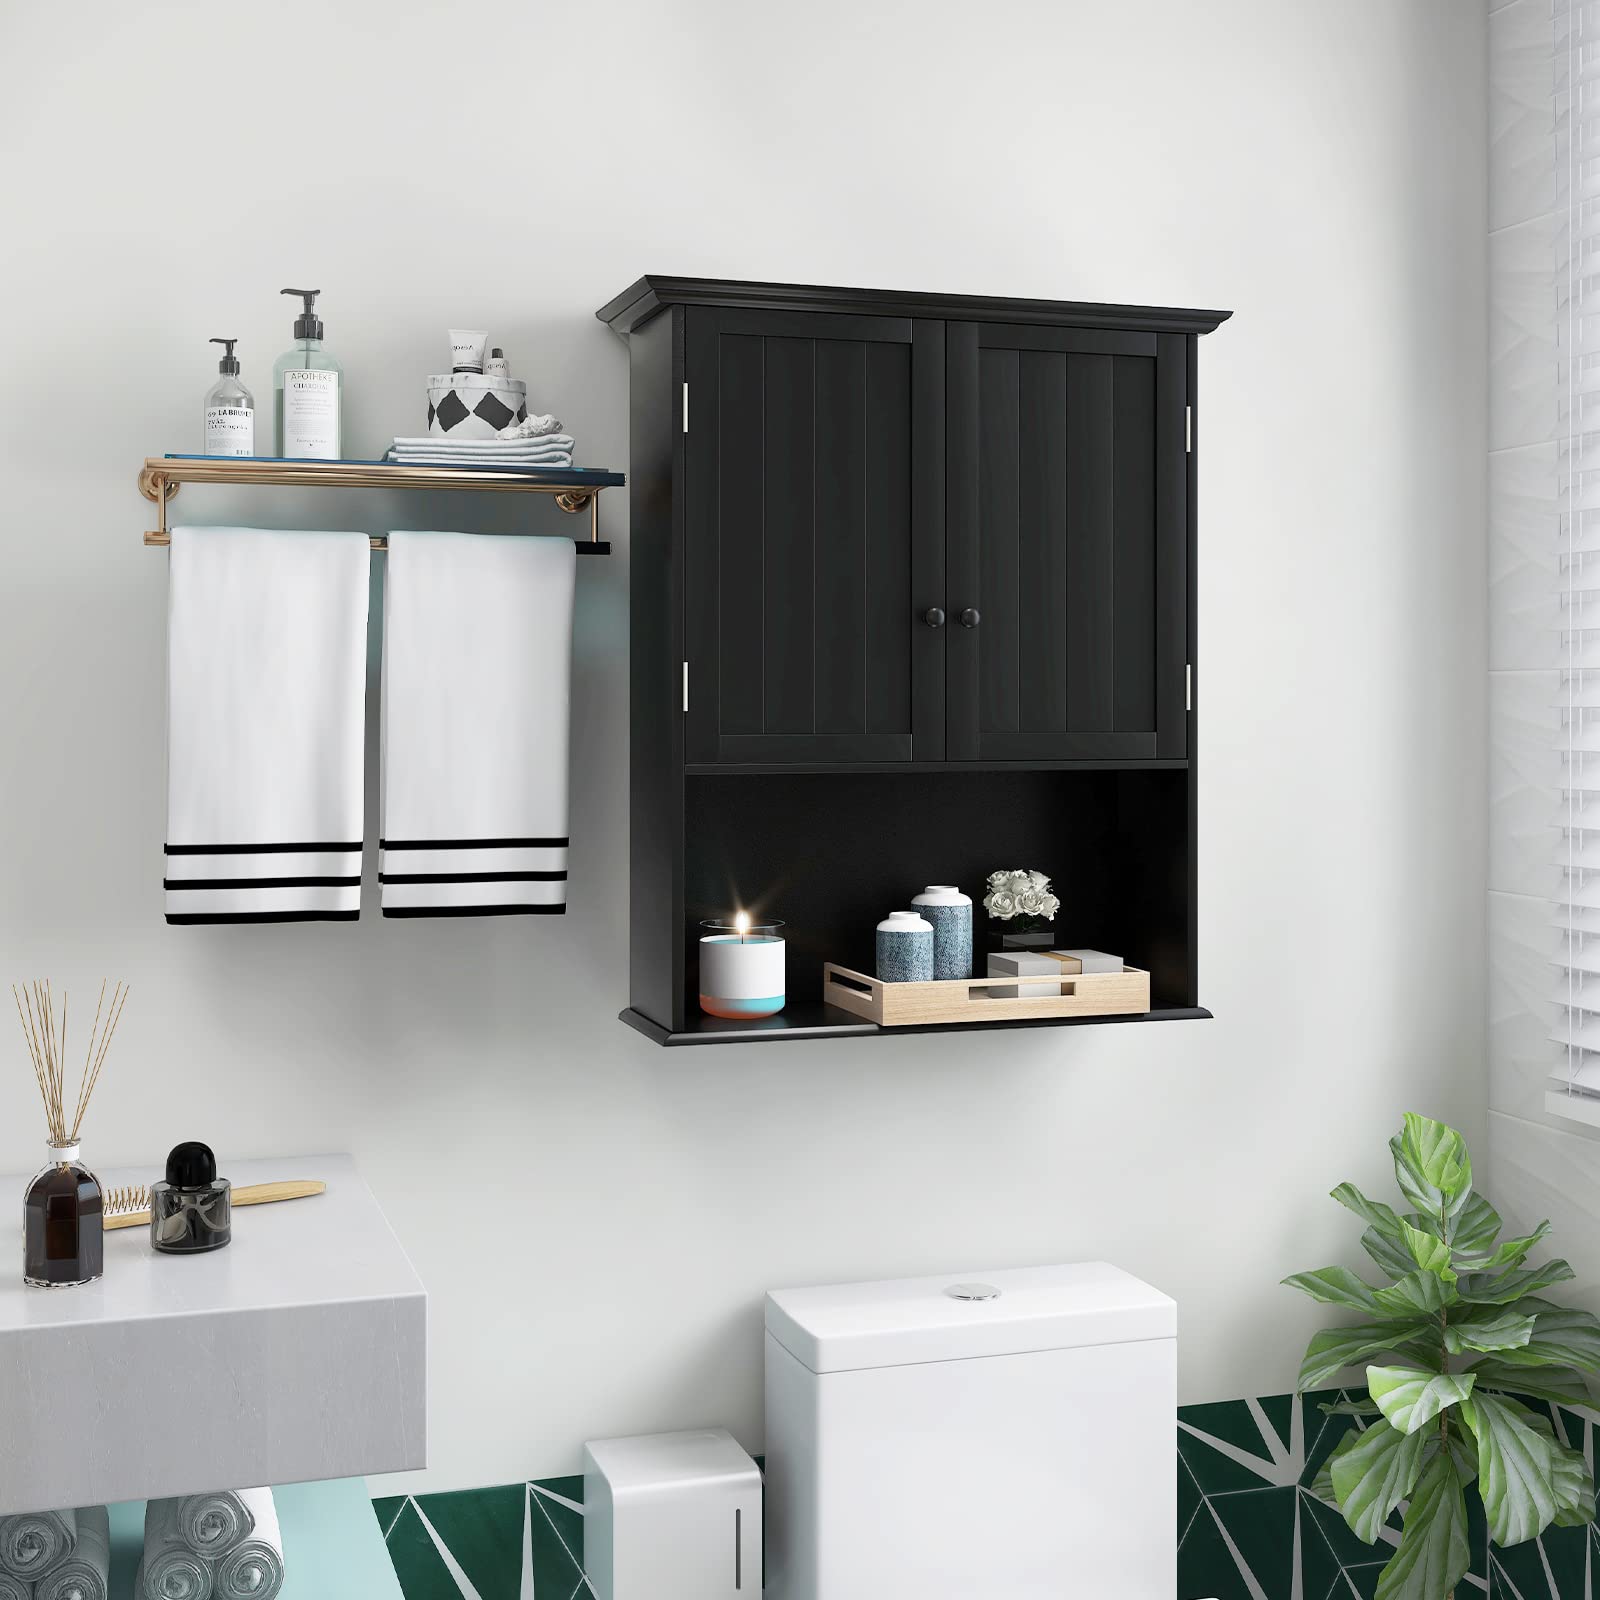 Giantex Bathroom Wall Mounted Cabinet - Storage Cabinet w/Adjustable Shelf